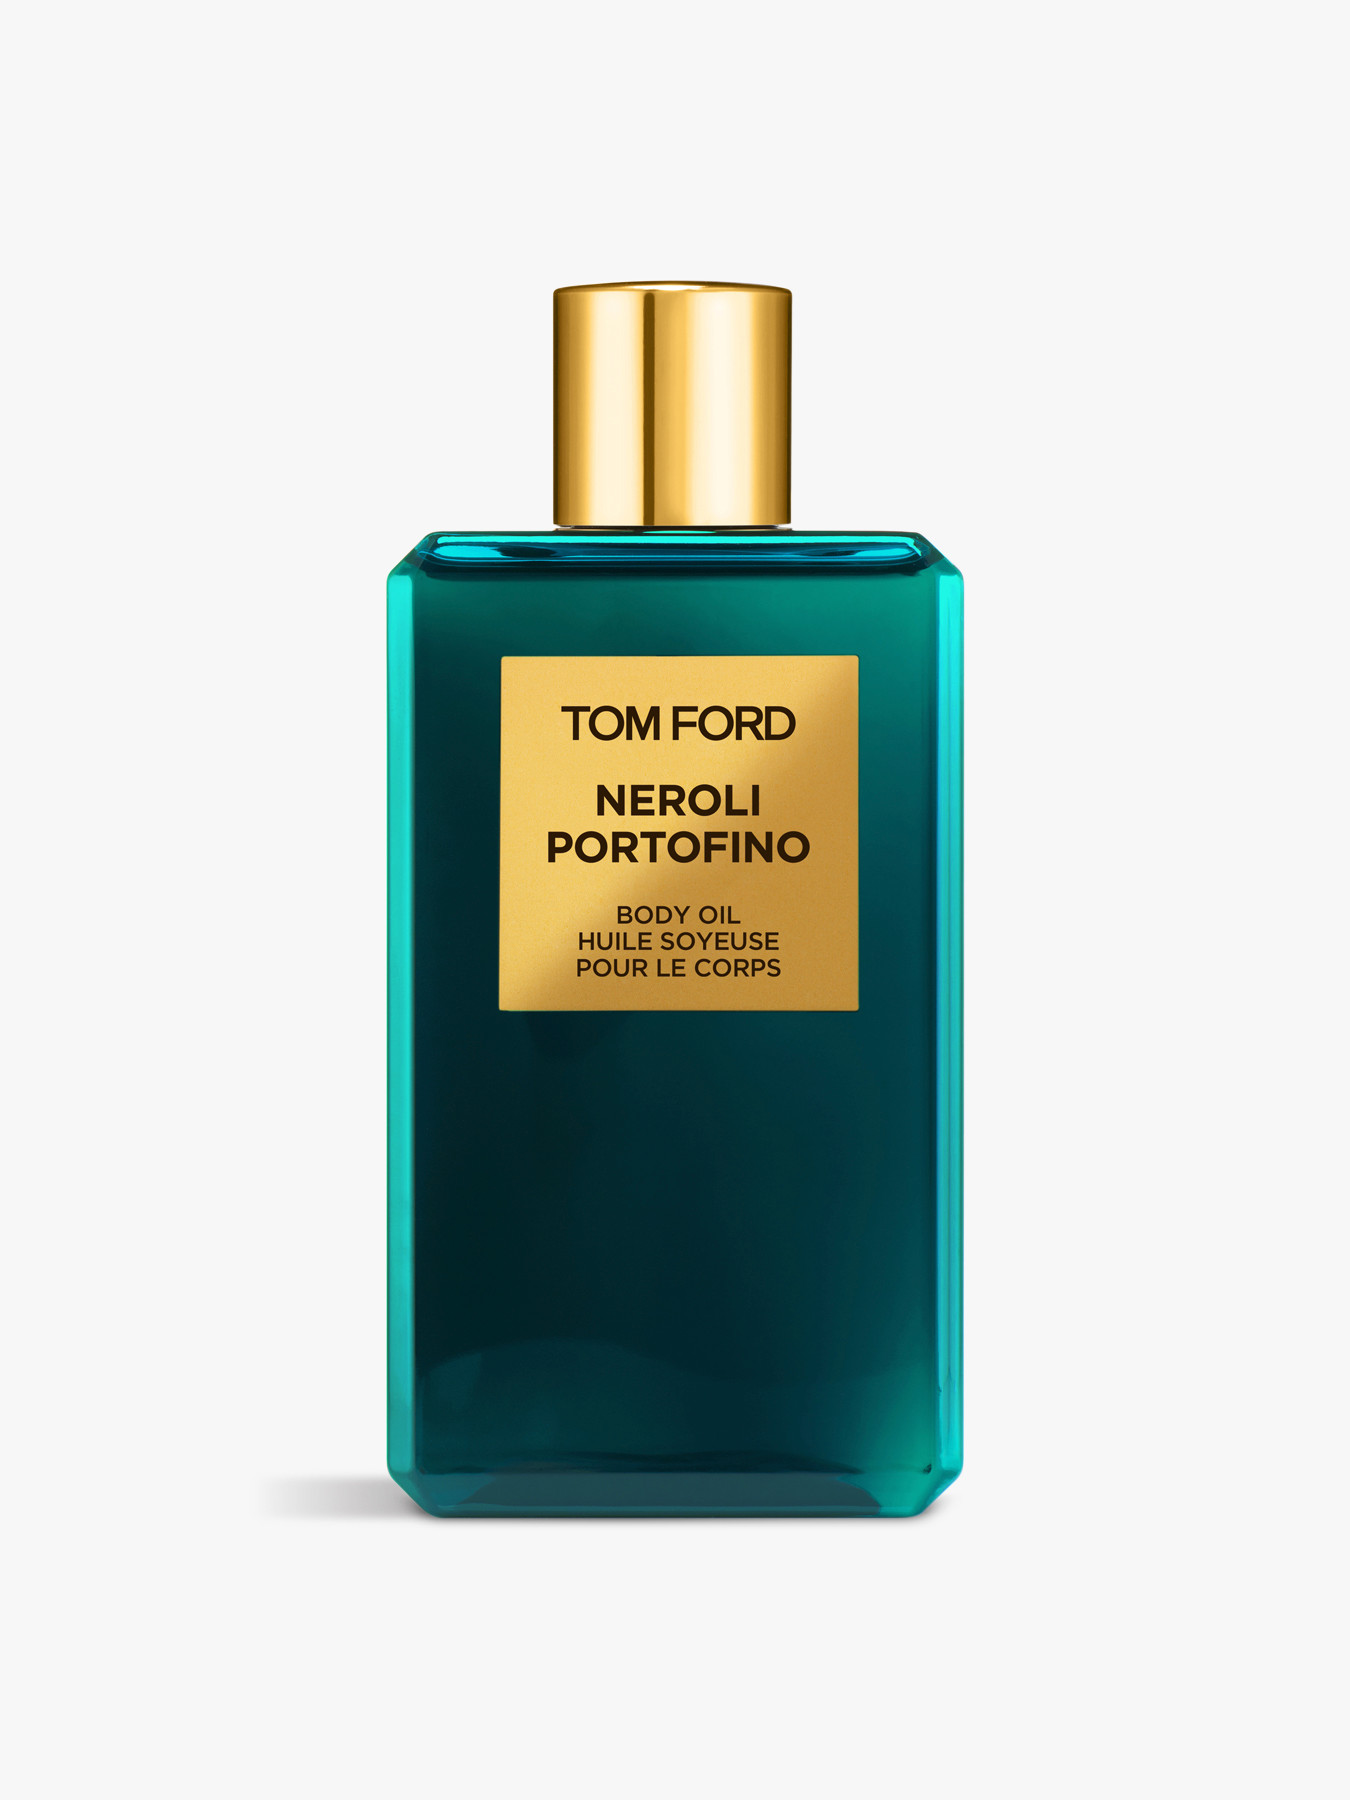 Tom Ford Neroli Portofino Body Oil 250 ml | Fenwick